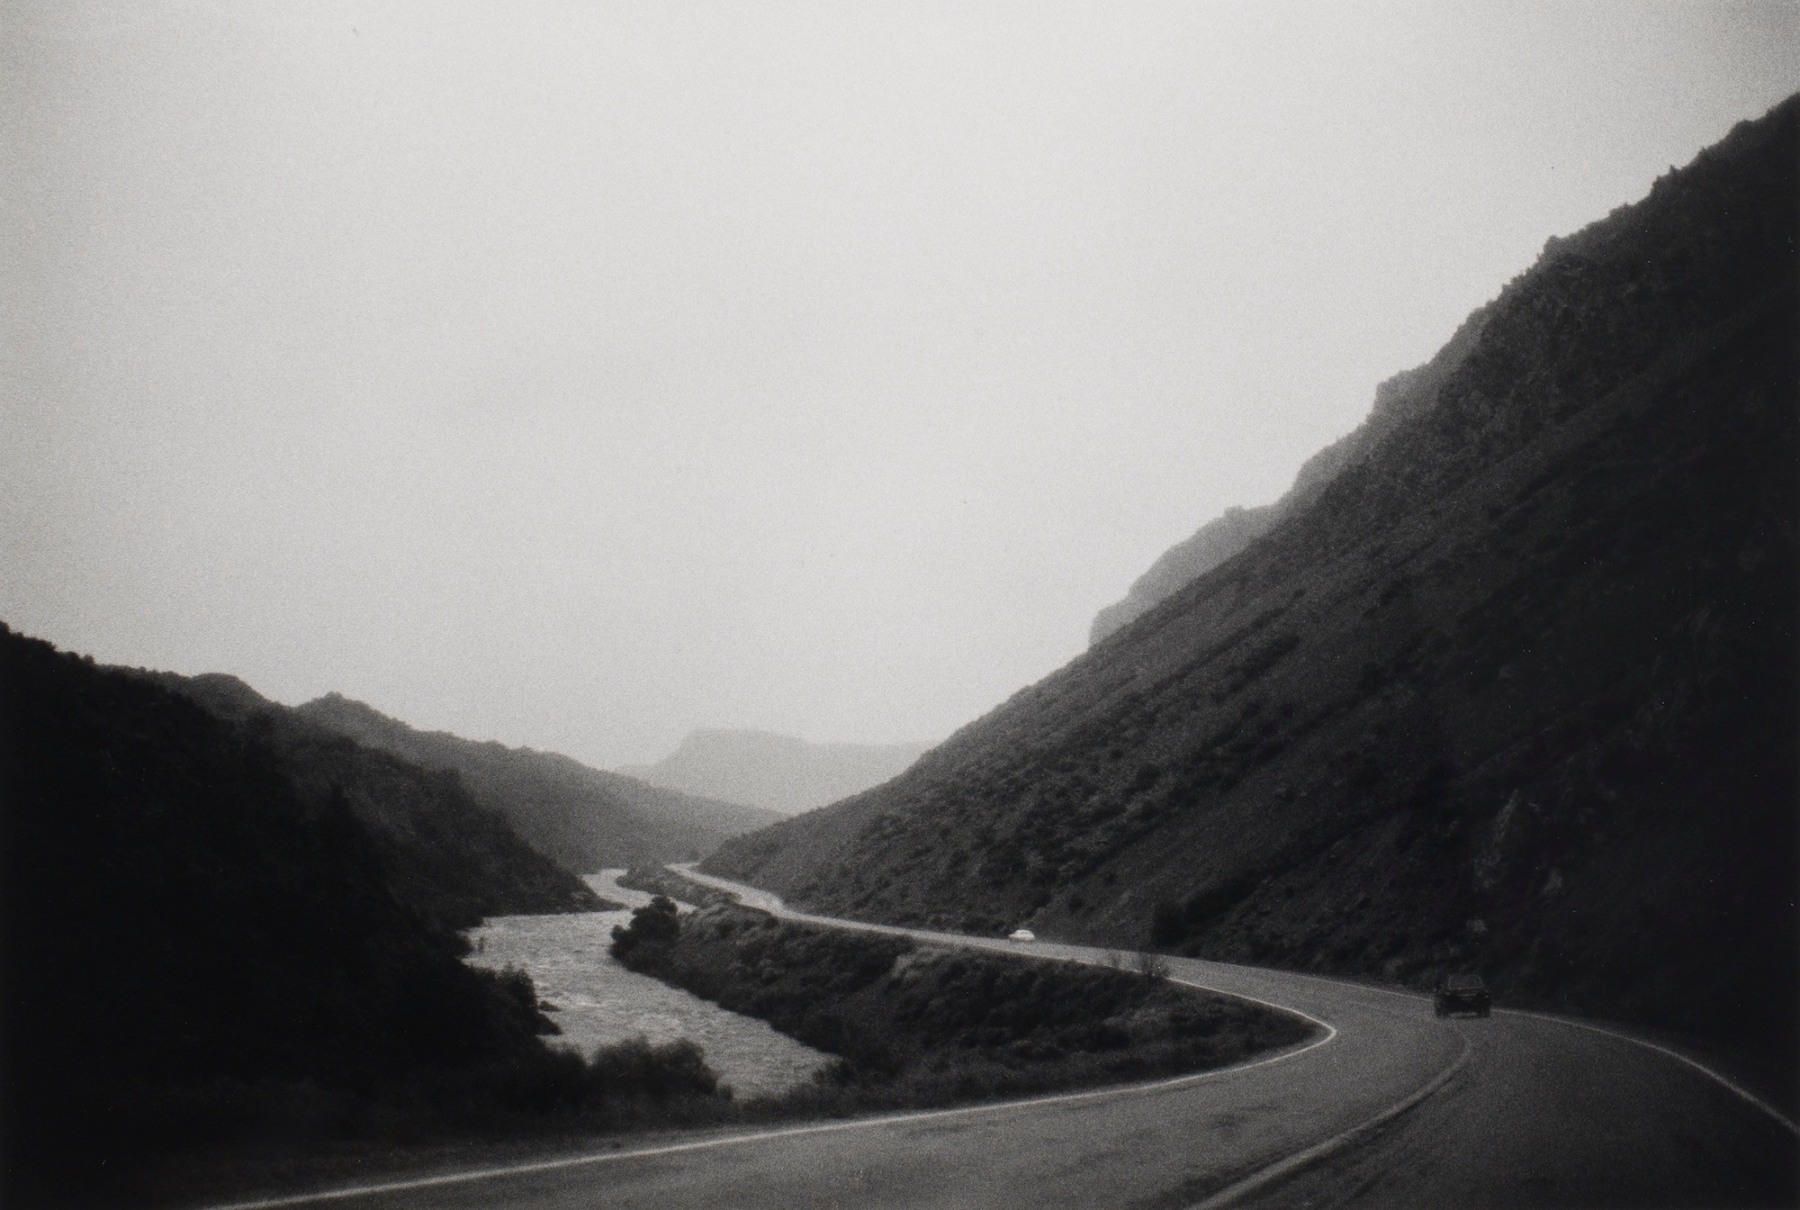 Bernard Plossu (1945-)  The Rio Grande near Taos, 1979  Gelatin silver print  10 x 14 inches (paper), black and white photography